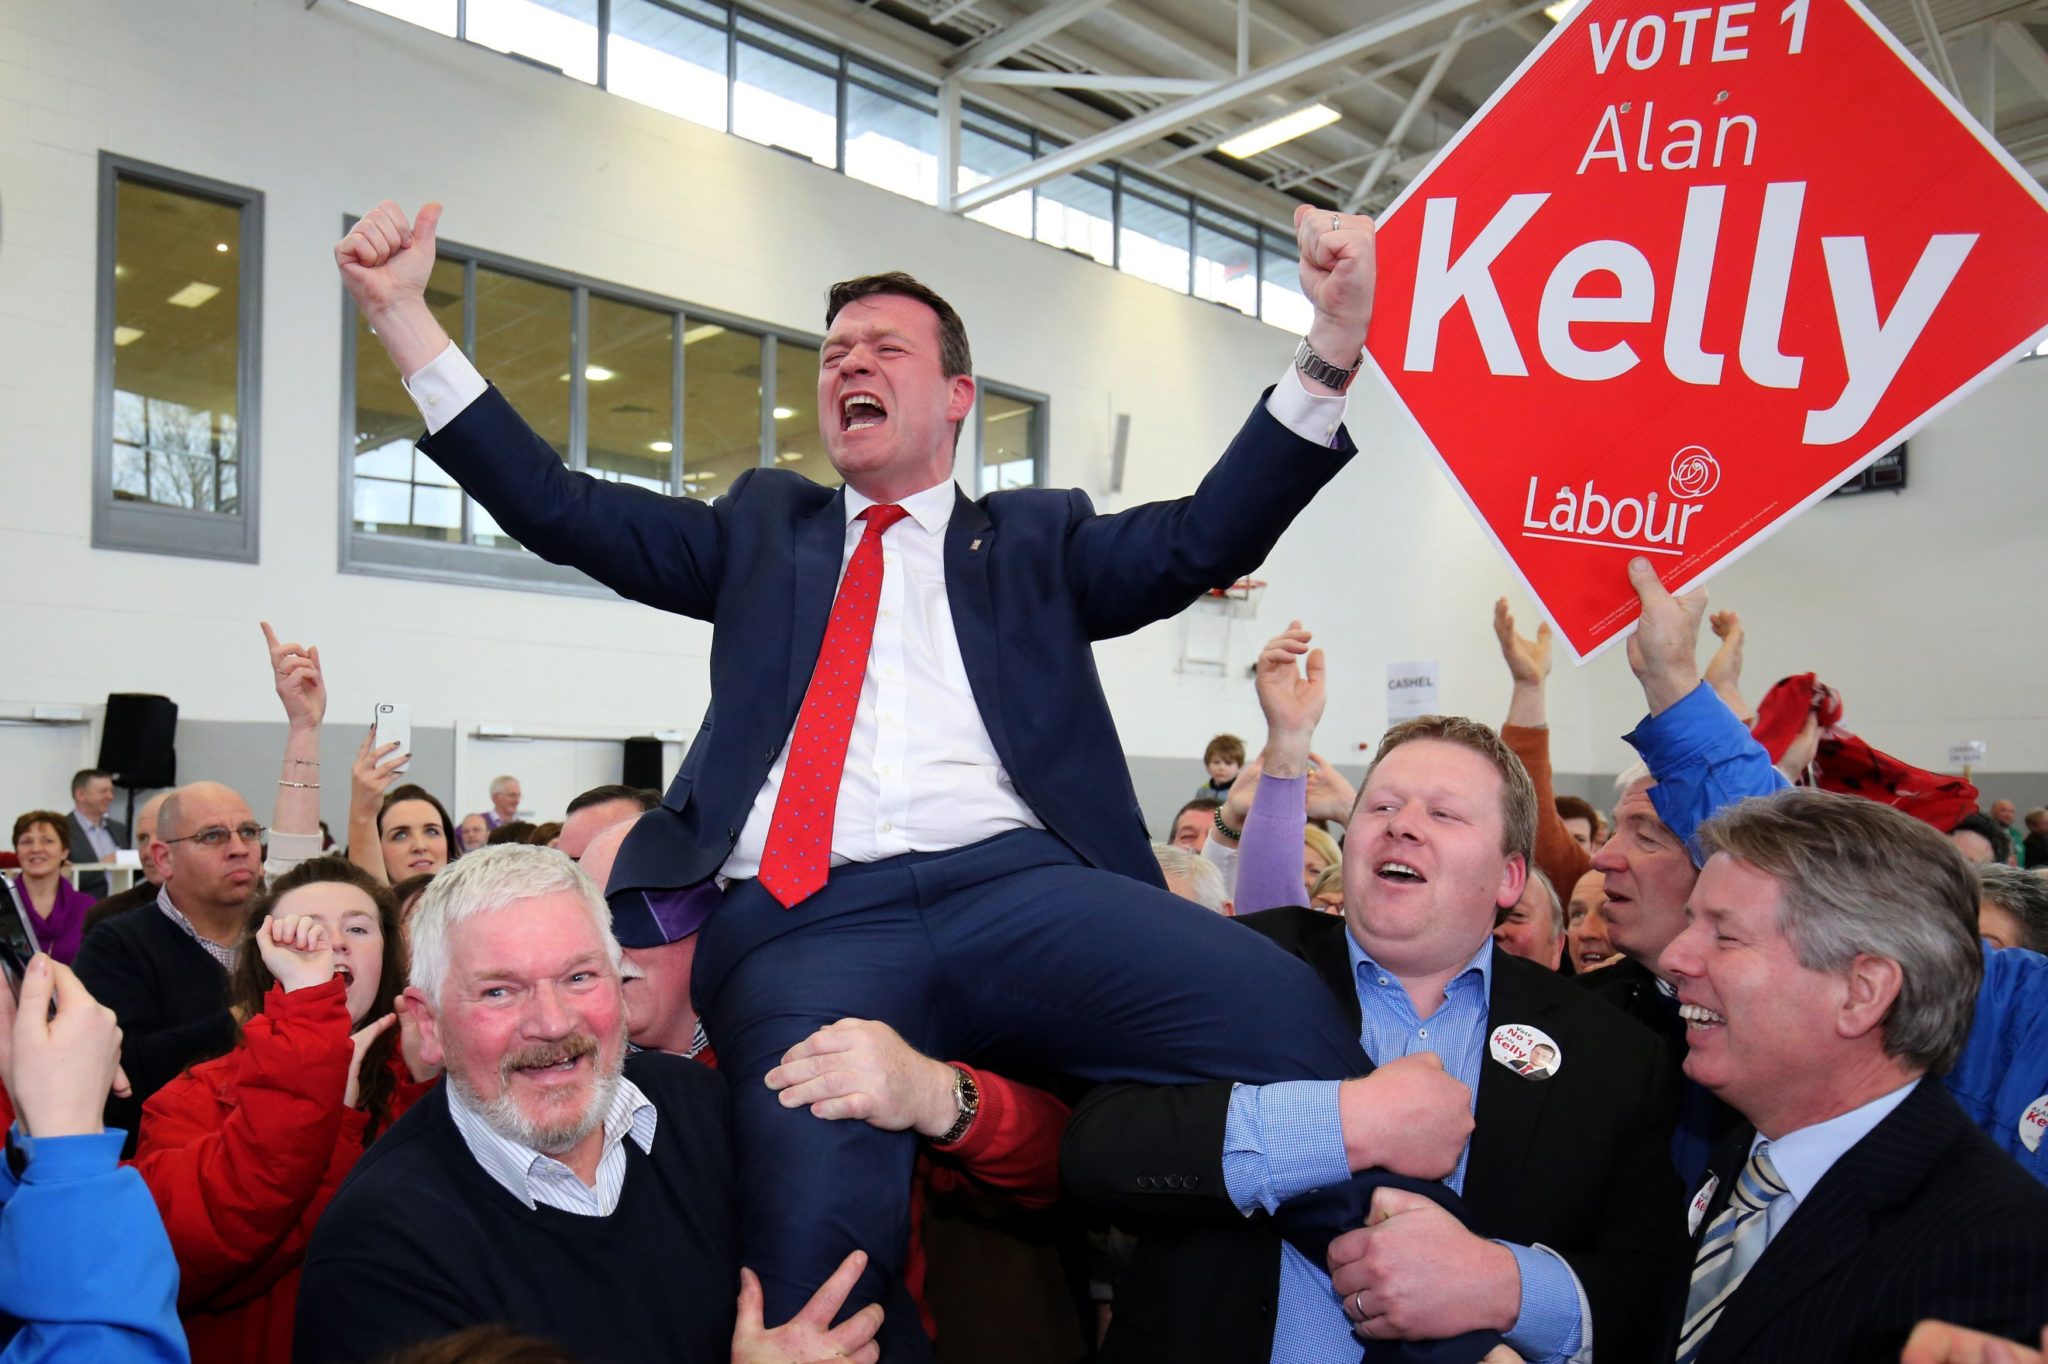 Labour leadership Alan Kelly